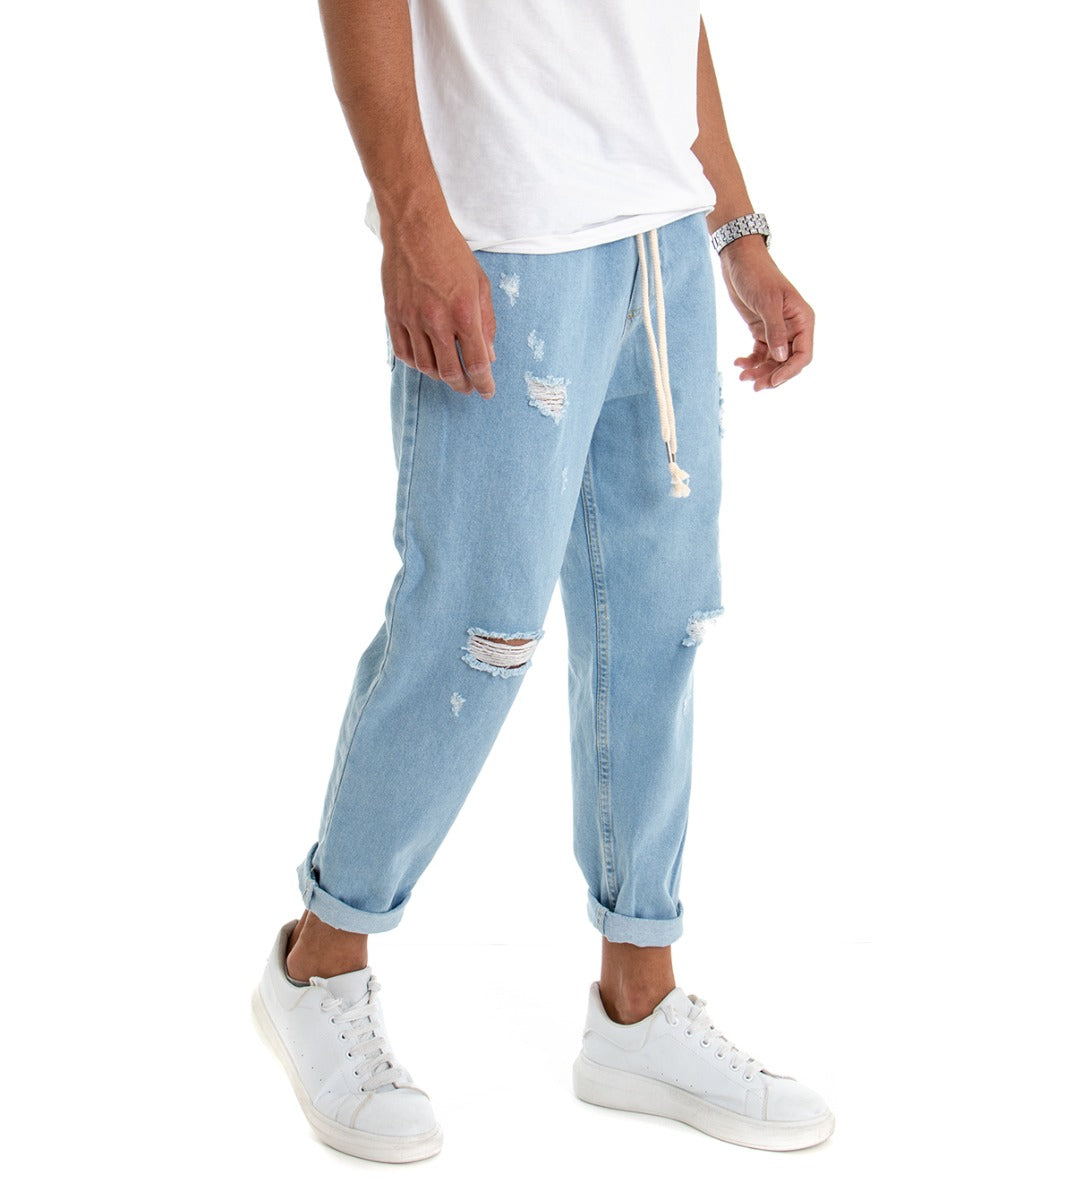 Pantaloni Uomo Jeans Denim Chiaro Rotture Loose Fit Coulisse Pantalaccio GIOSAL-P3021A